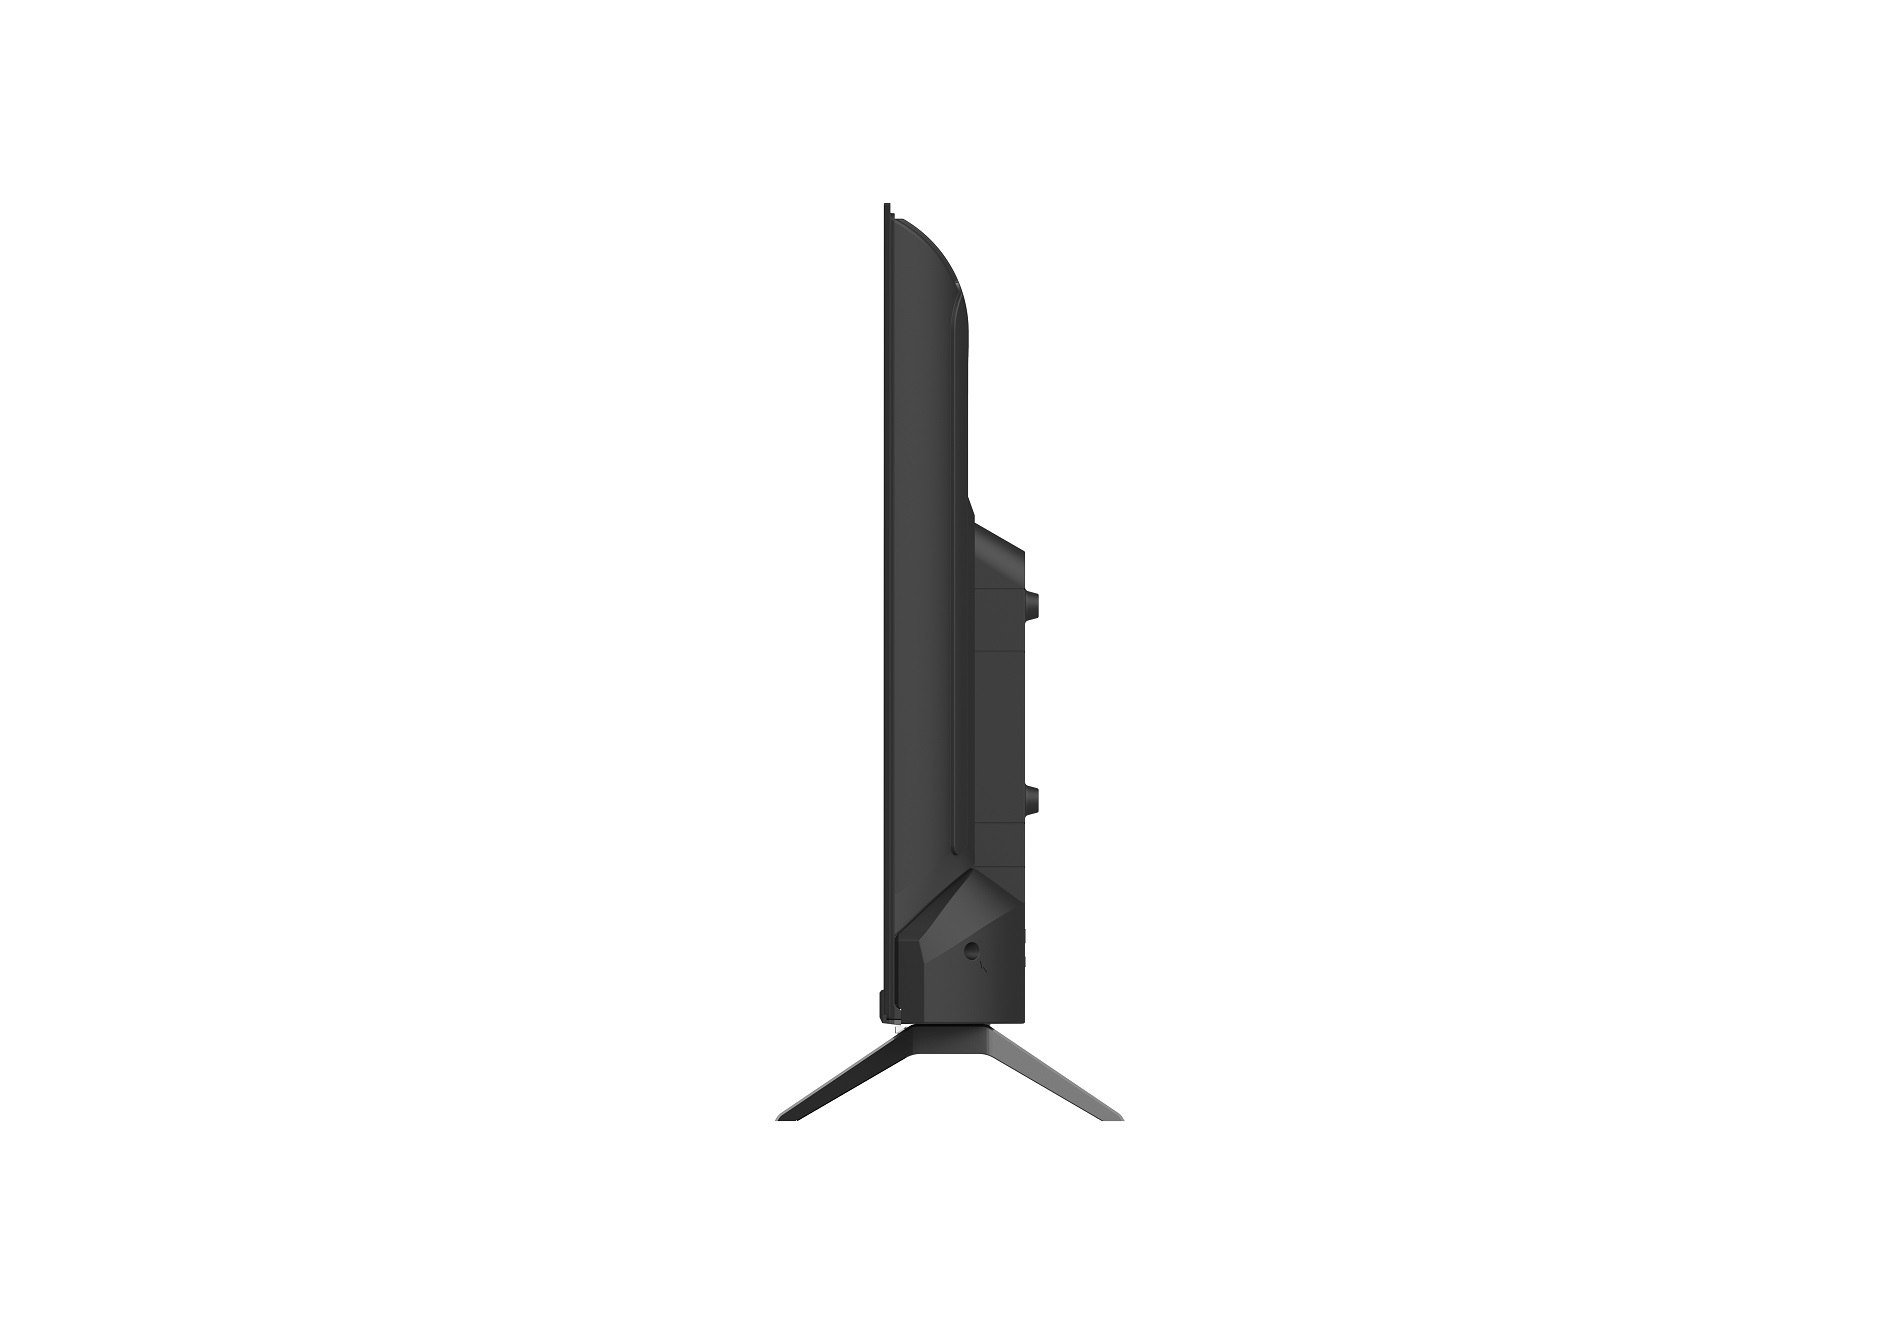 Tesla 32S605BHS 32´´ HD LED TV Black